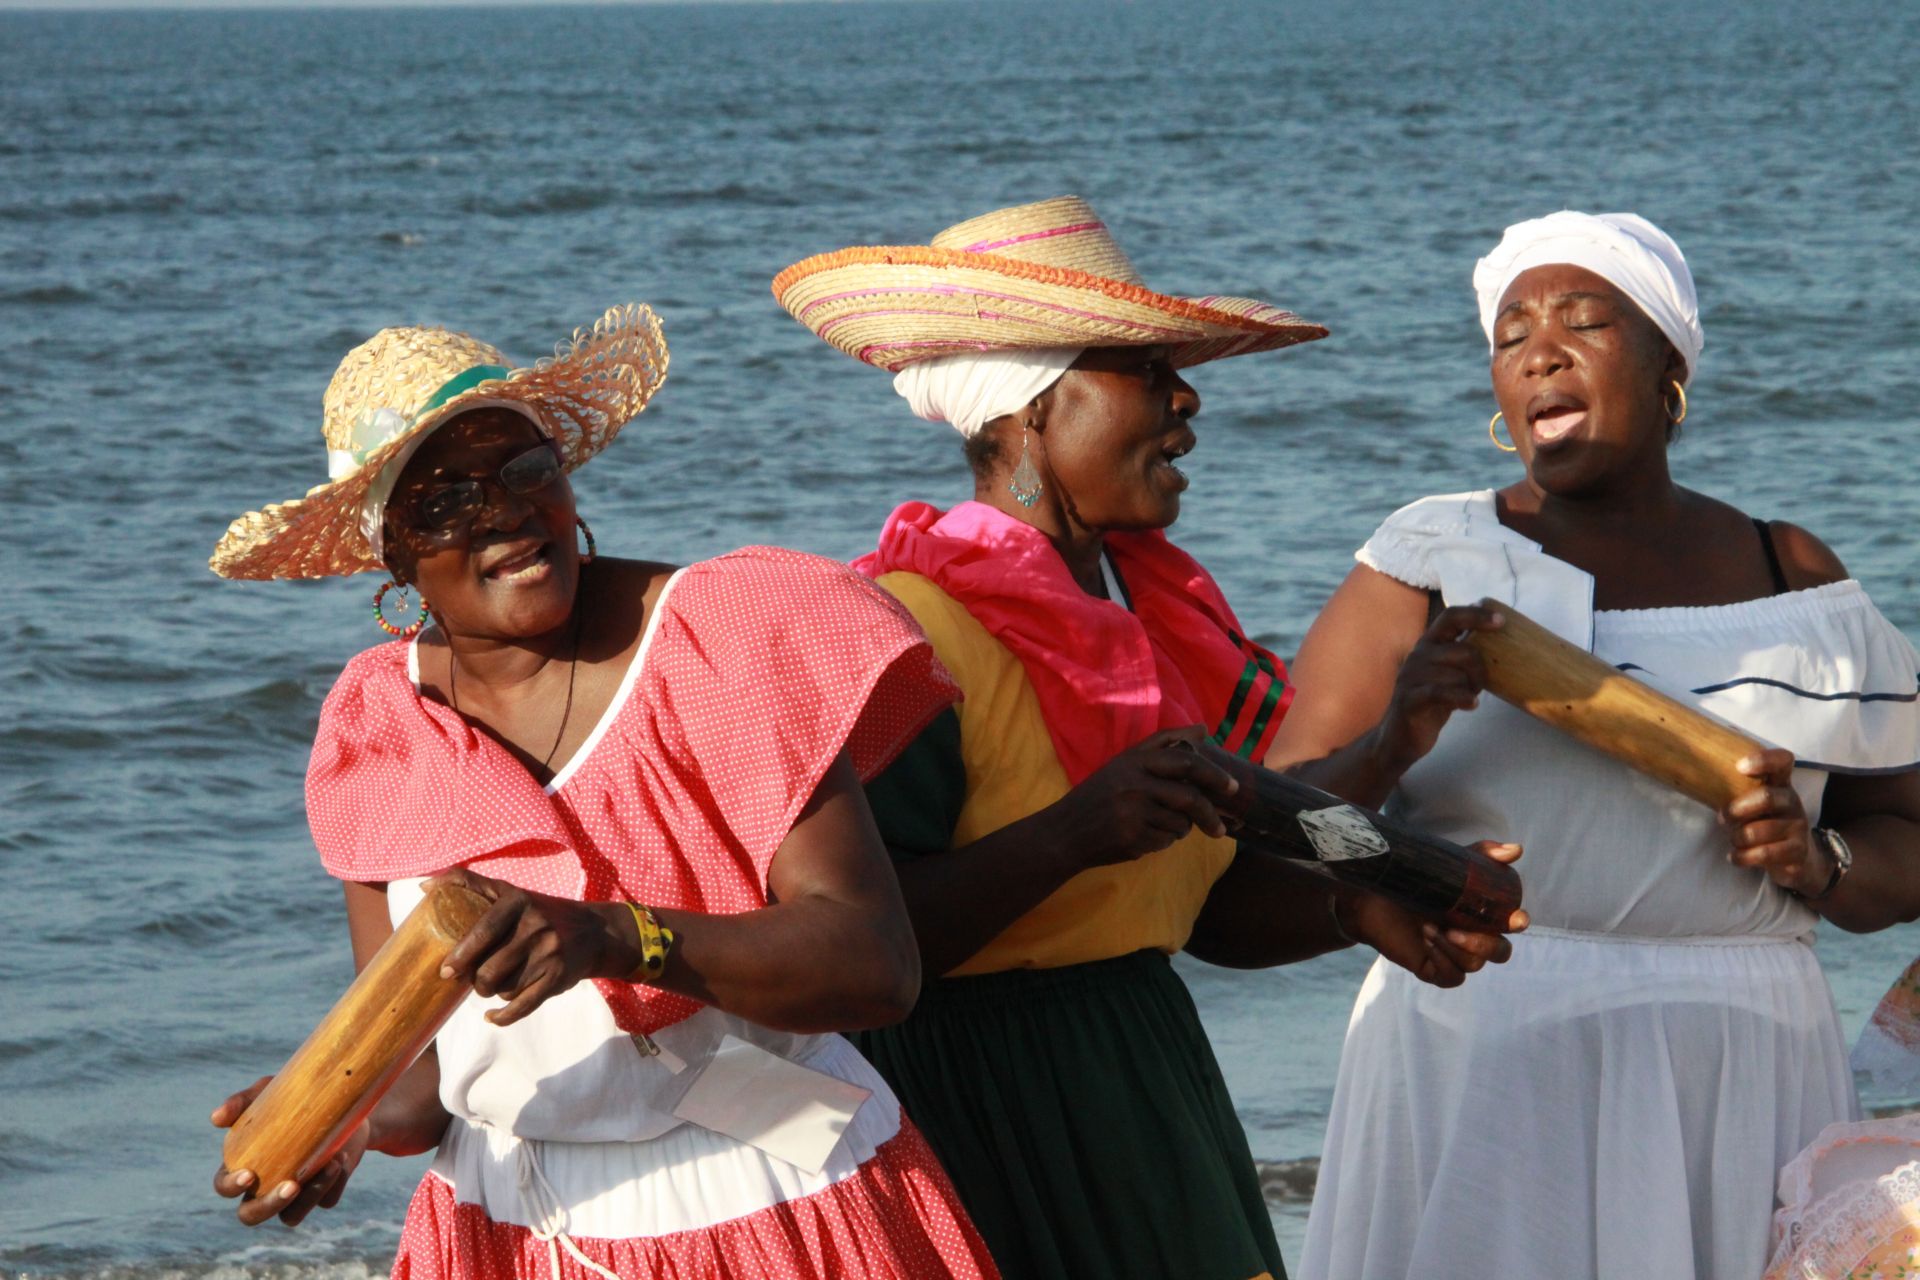 Cantadoras - women singers, Colombia